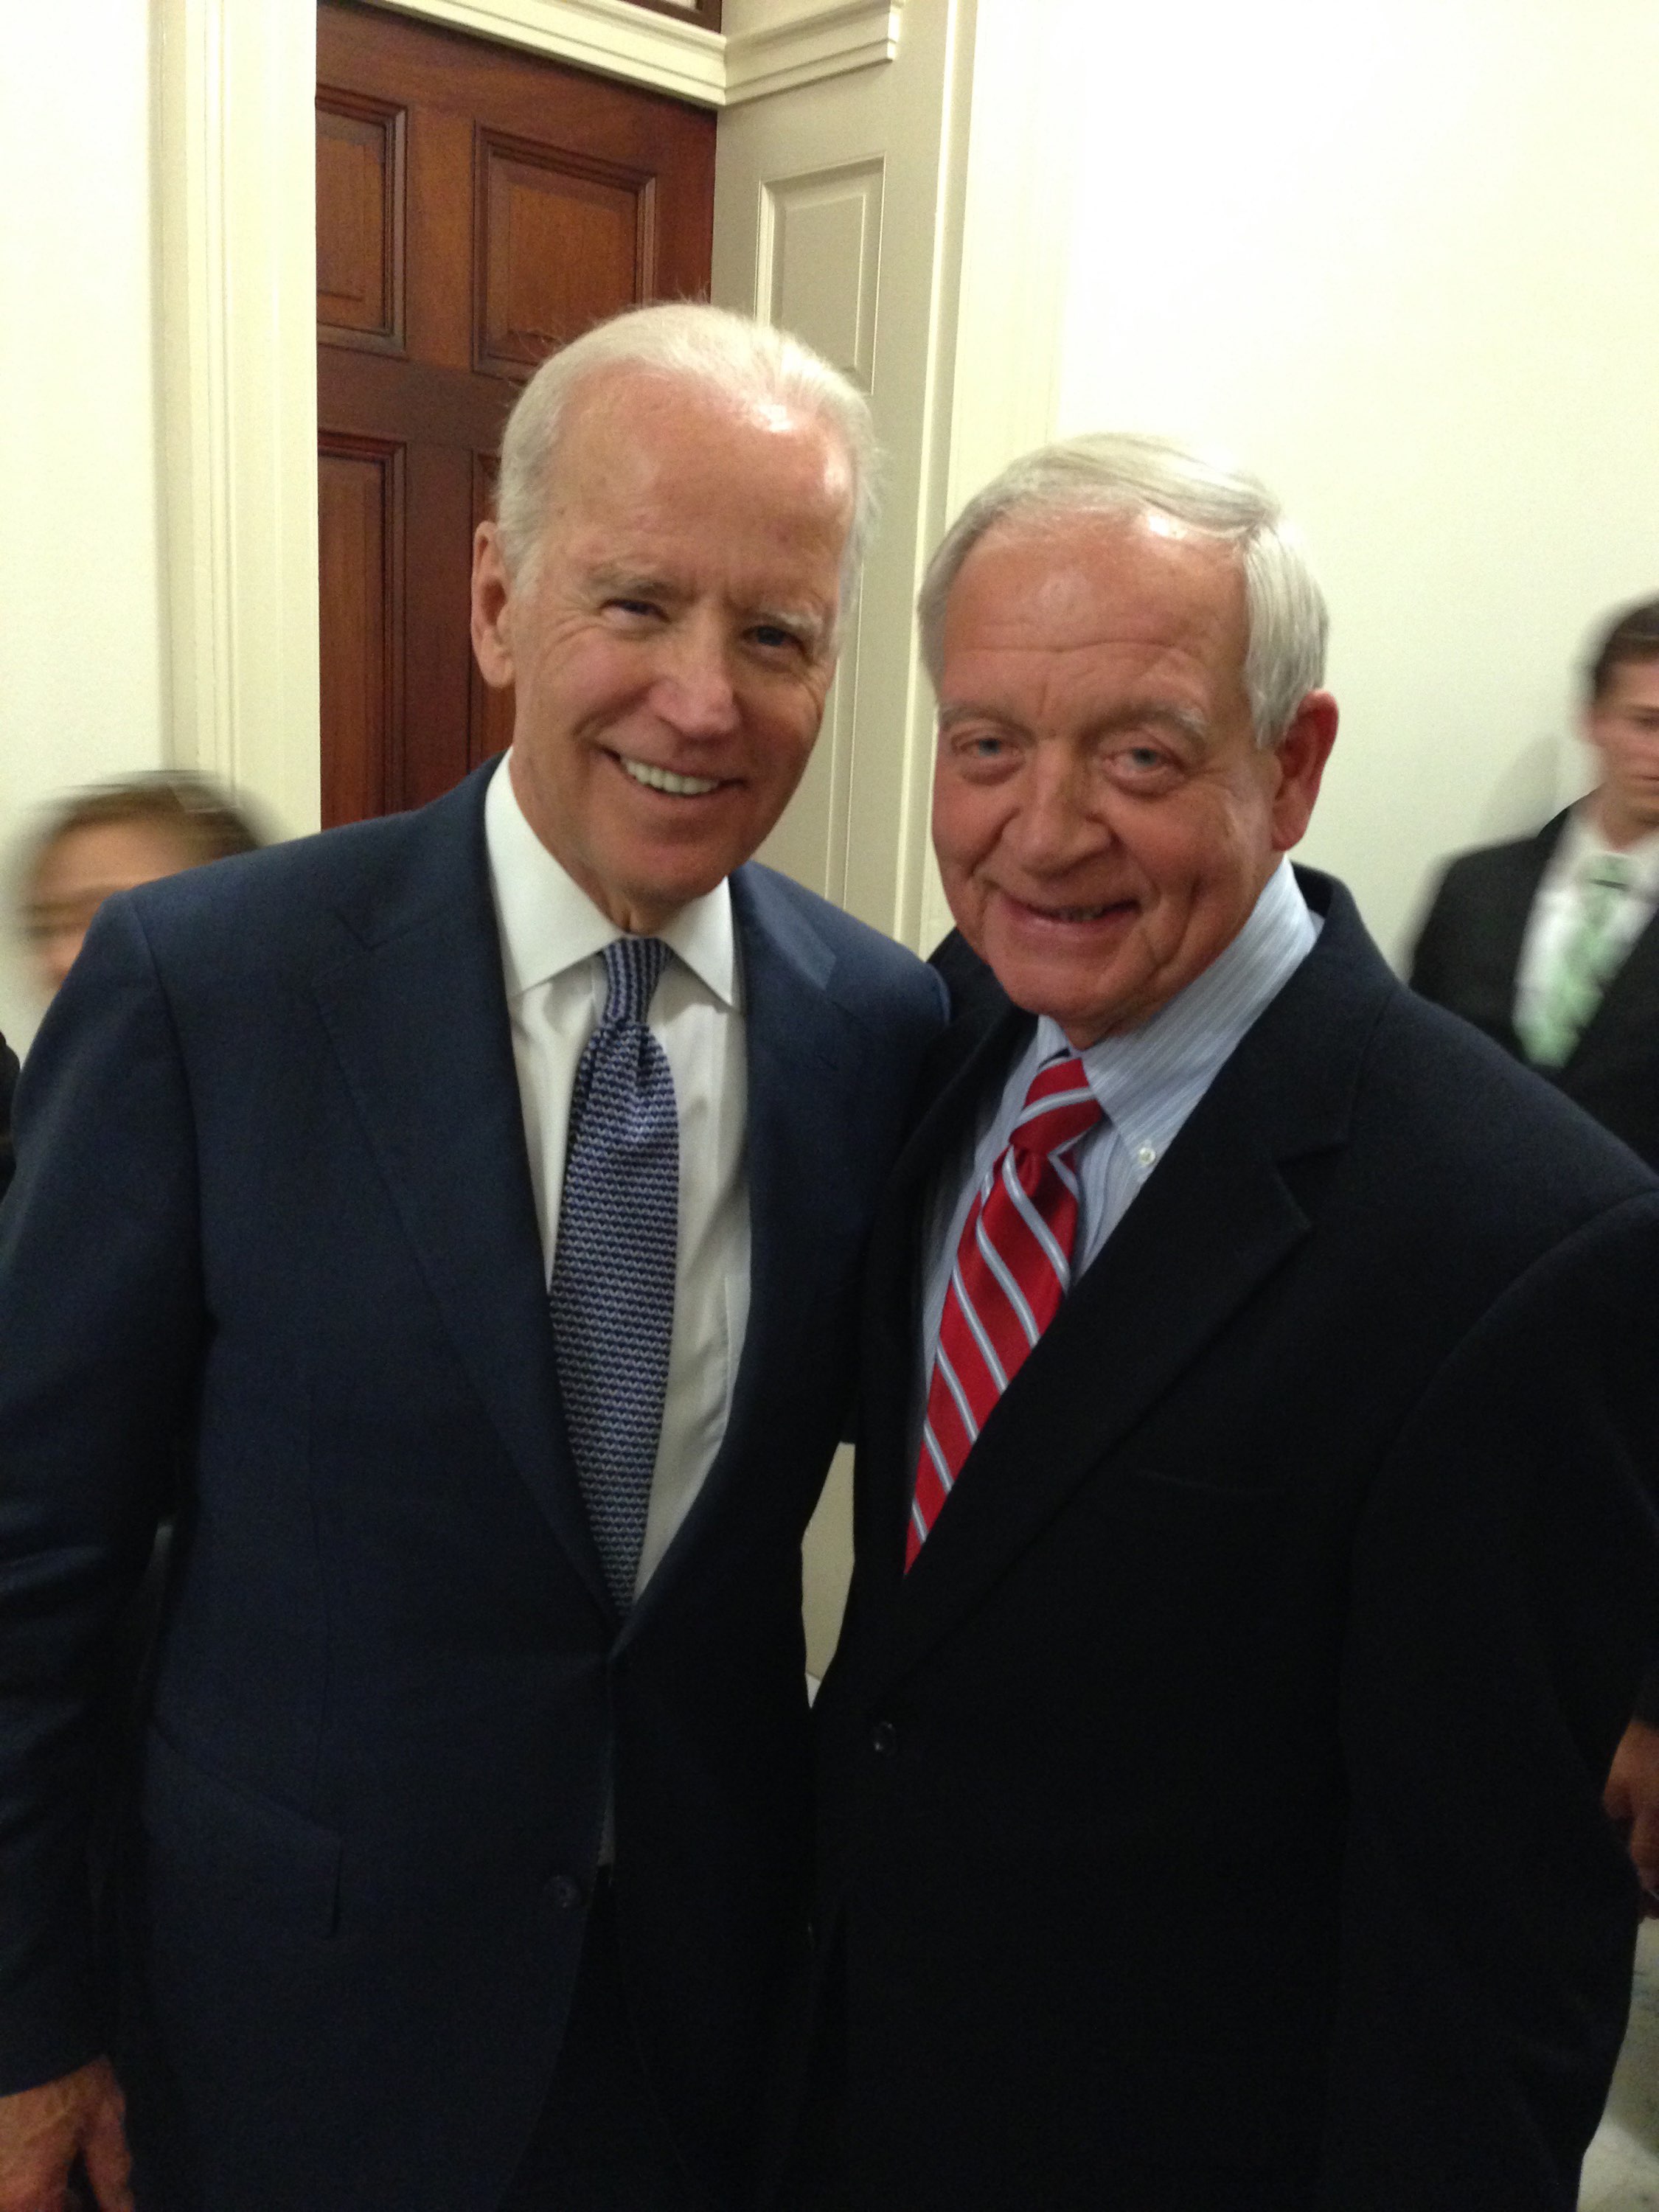 Dennis Hertel and President Biden